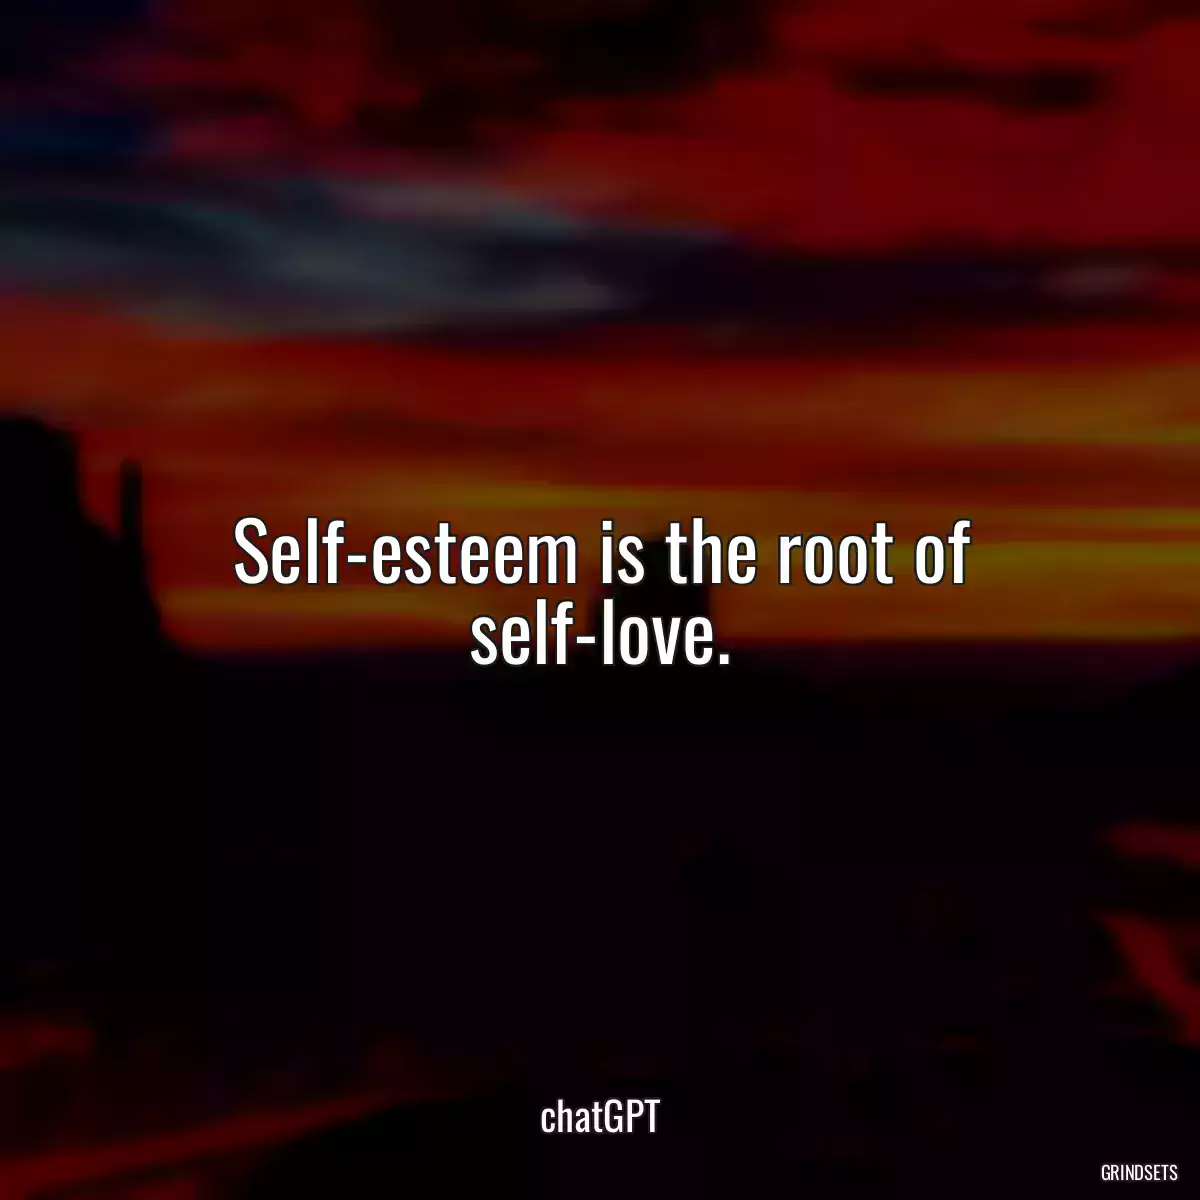 Self-esteem is the root of self-love.